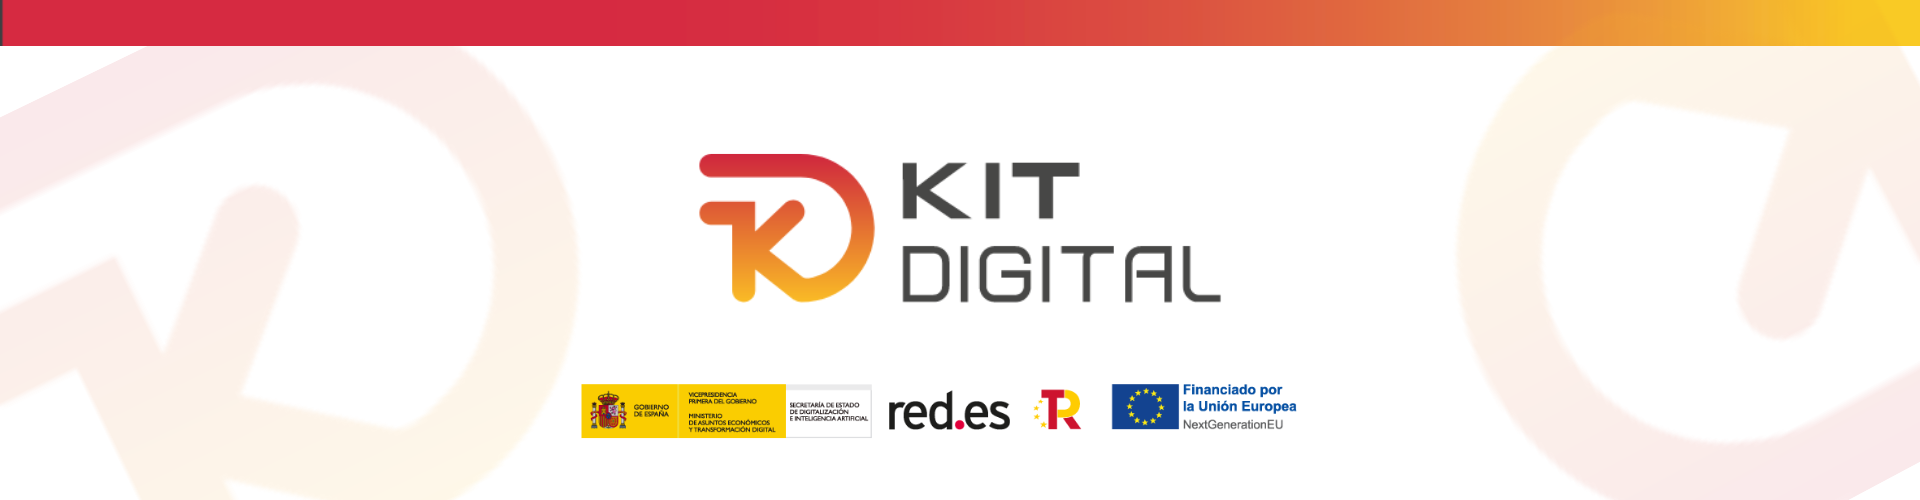 Kit Consulting – Kit Digital Grandes empresas